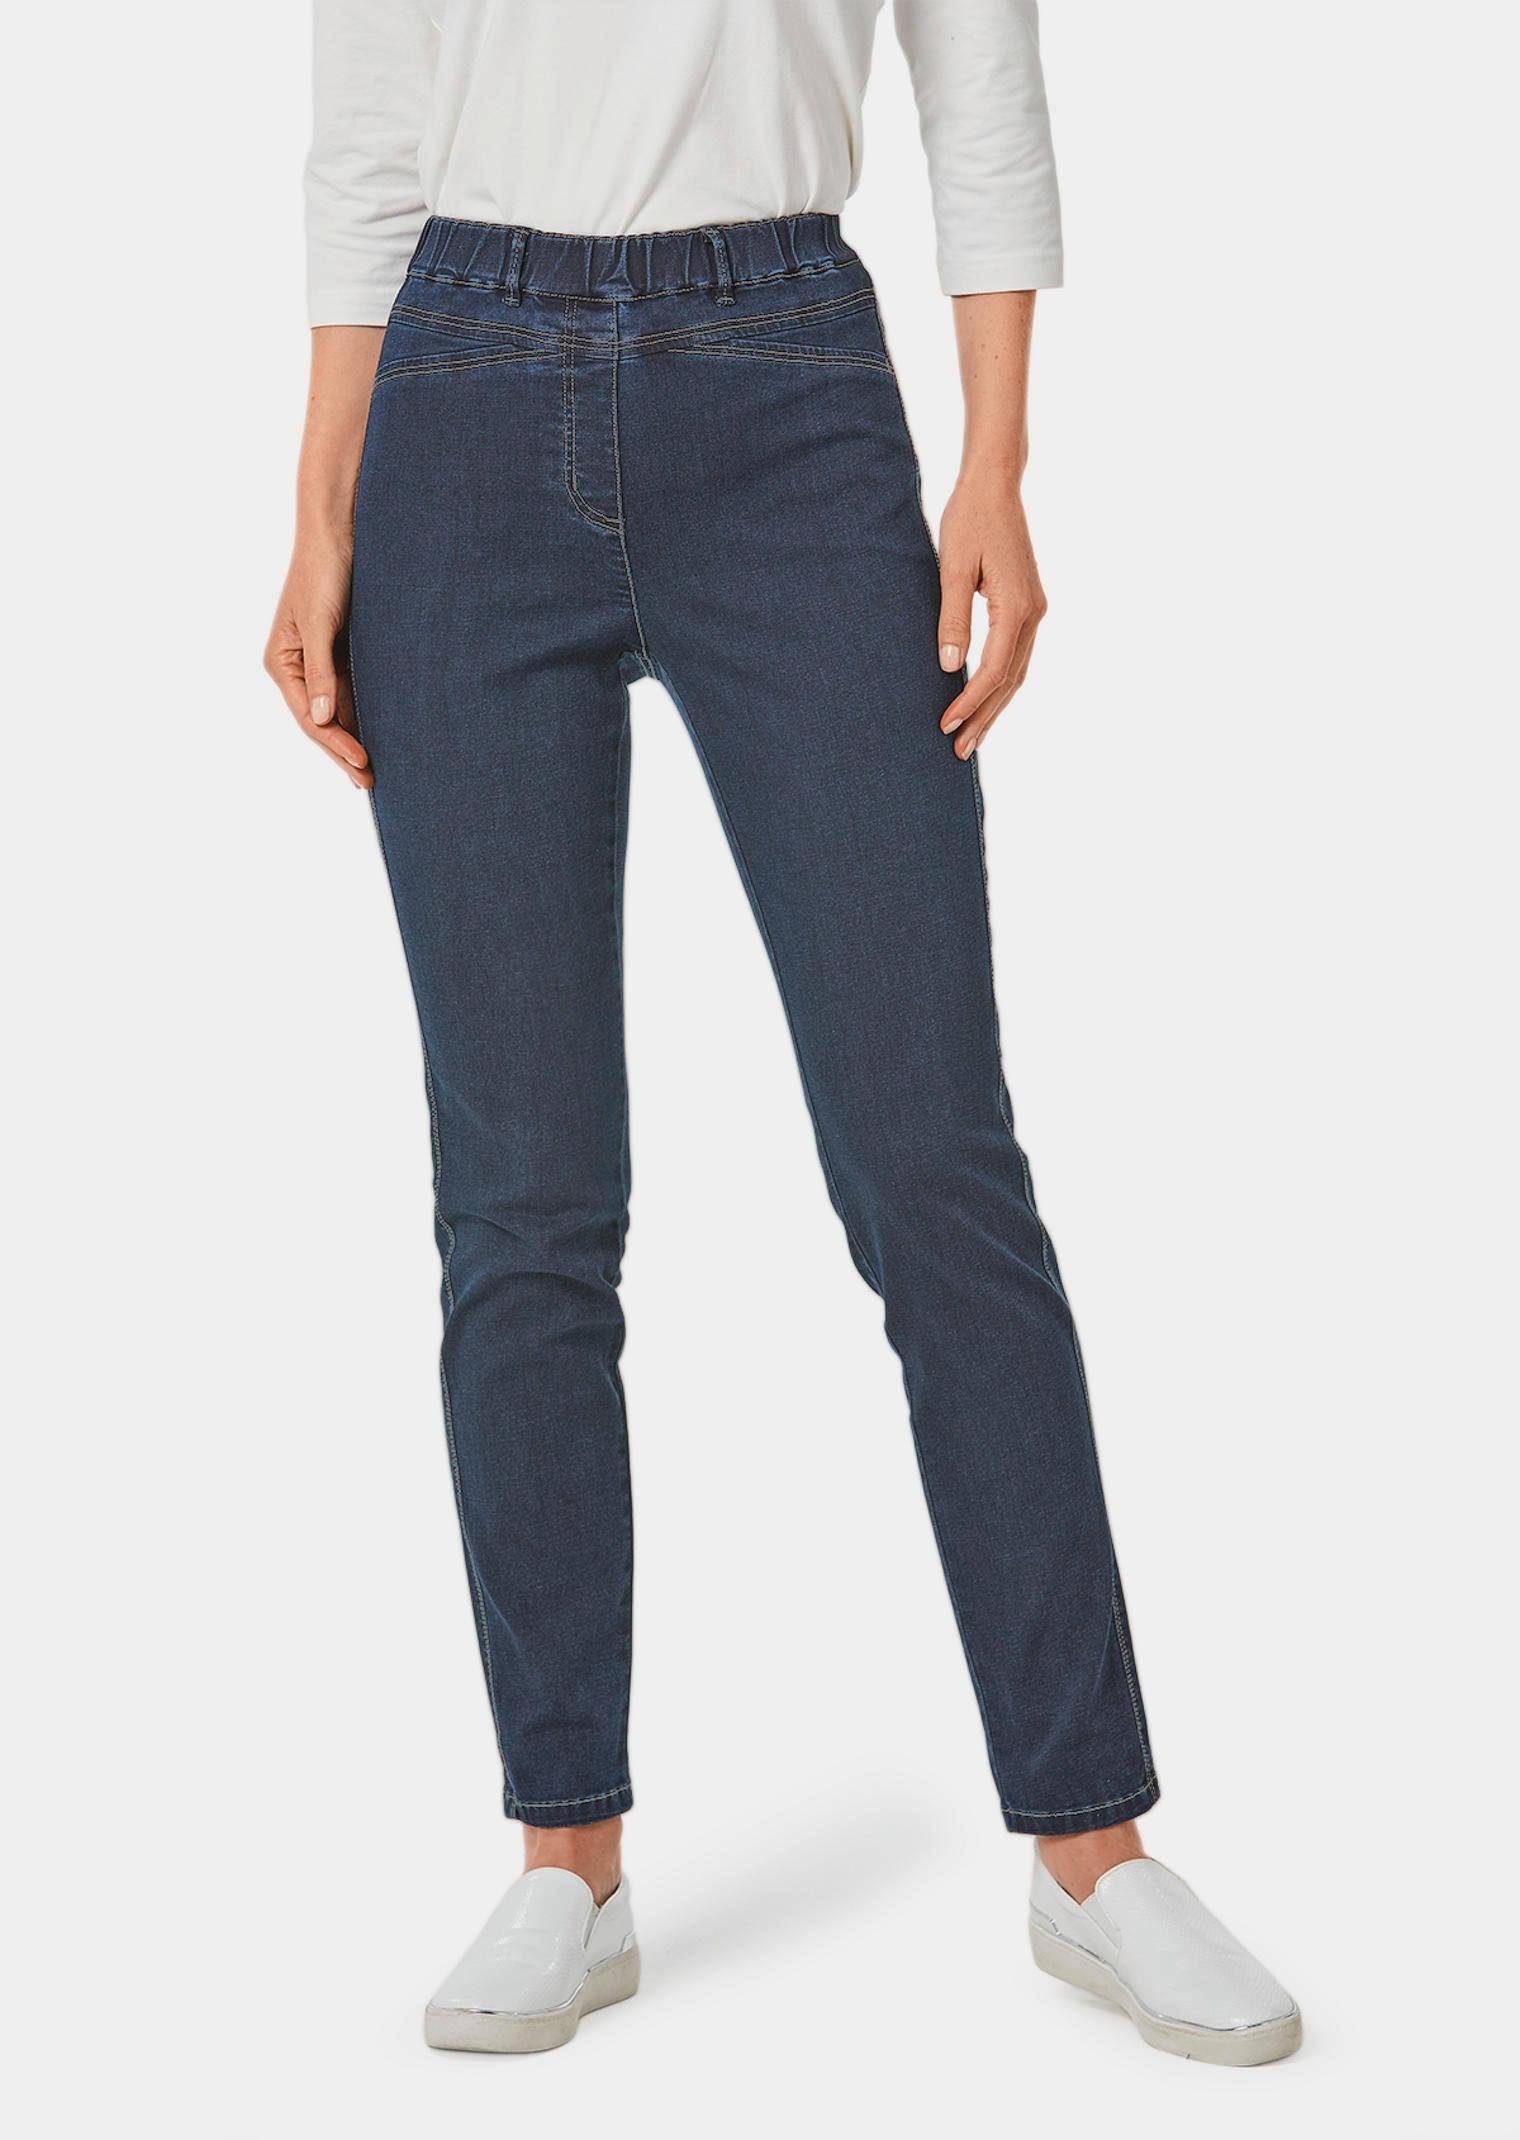 GOLDNER Bequeme Jeans Kurzgröße: dunkelblau | Slim-Fit Jeans